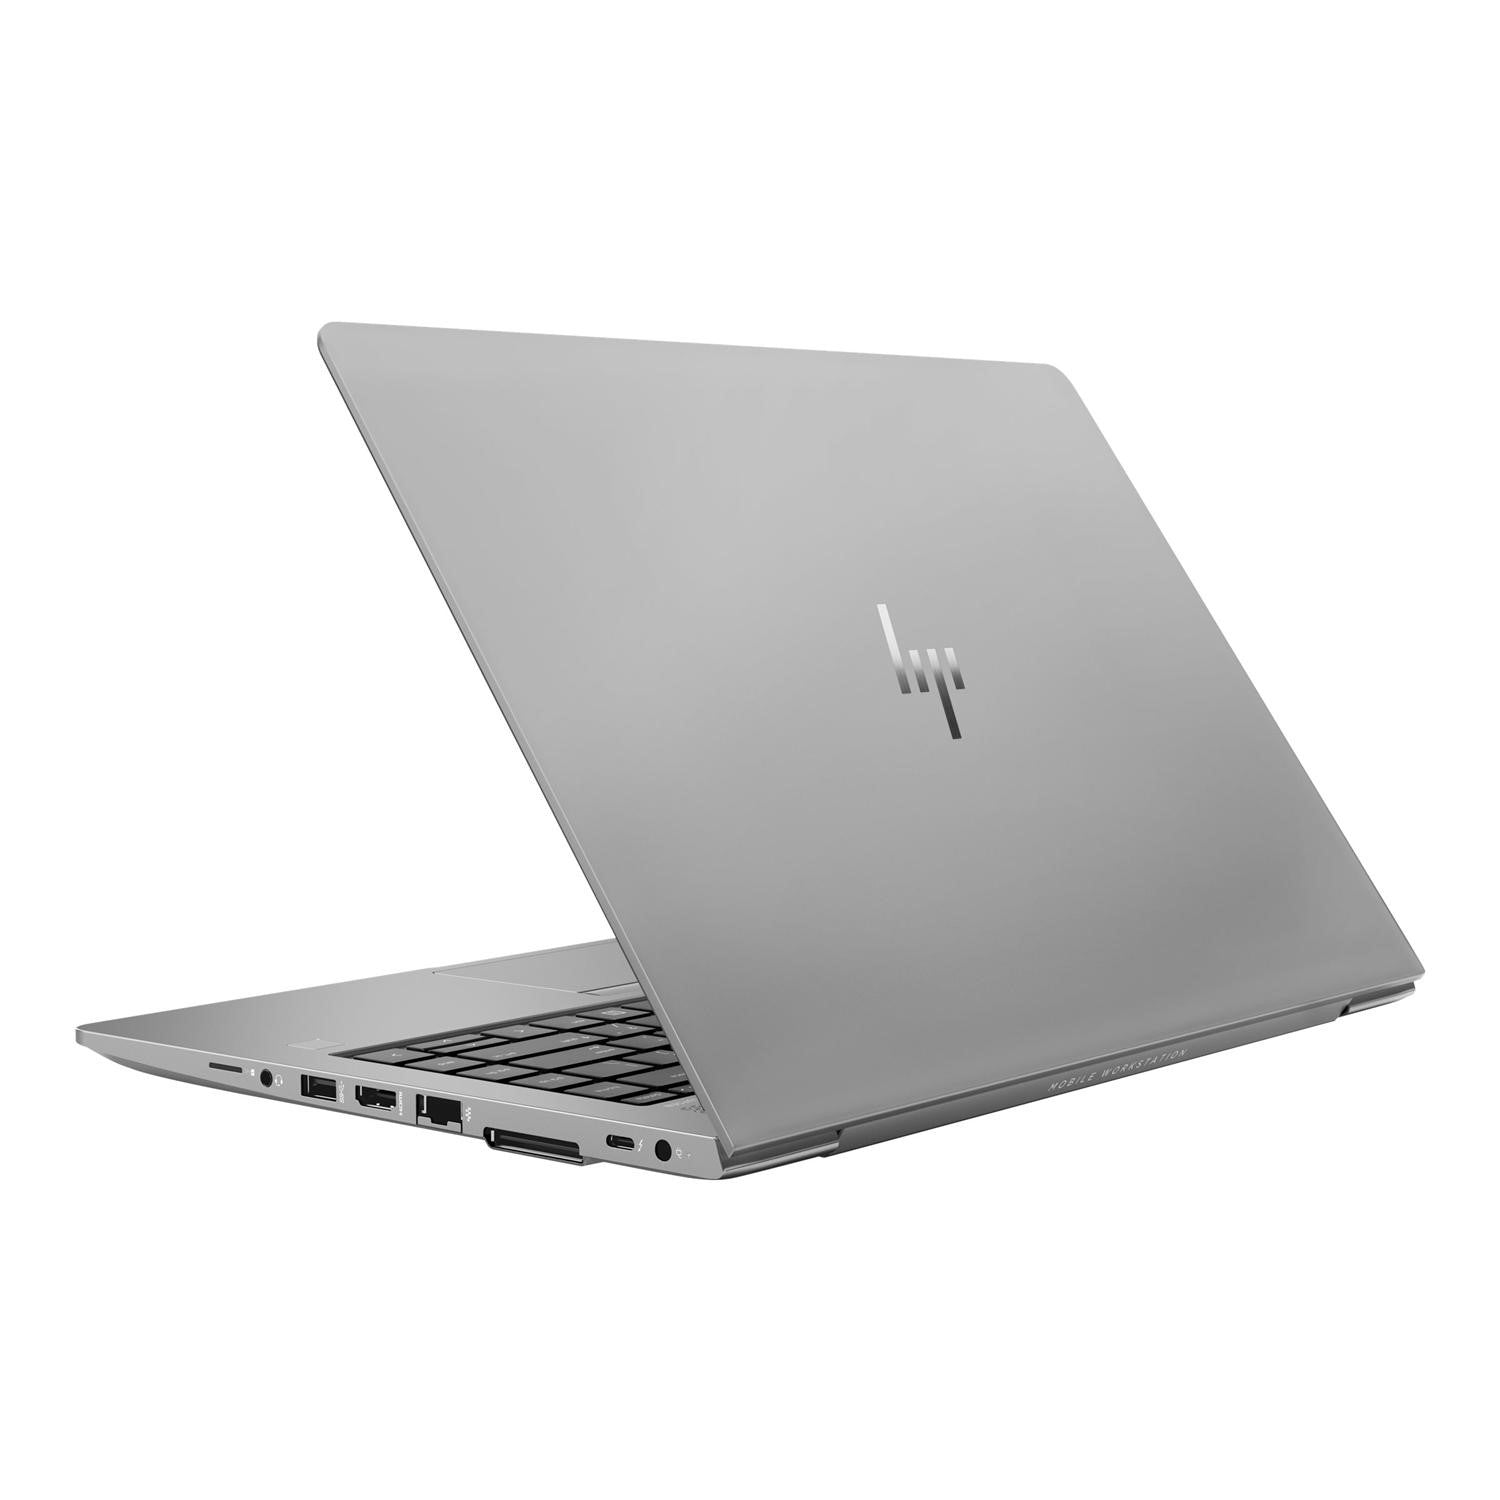 HP ZBook 14u G5, Intel Core i7-8550U, 16GB RAM, 256GB SSD, 14" - Silver